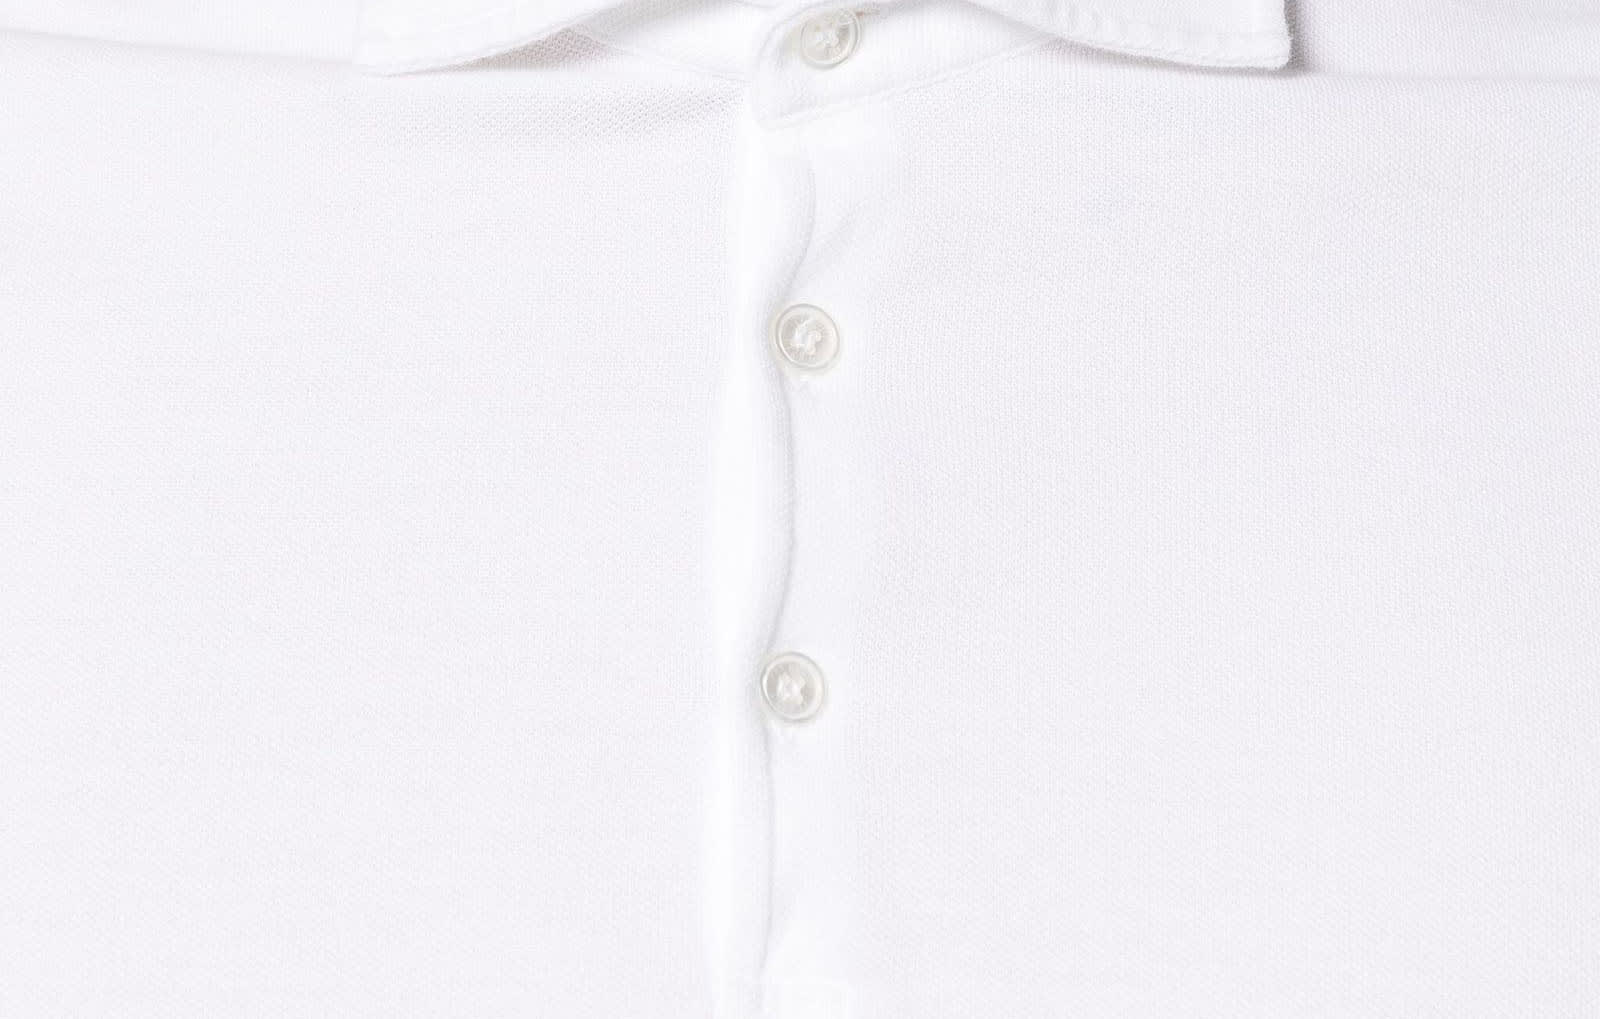 Shop Fedeli White Cotton Polo Shirt